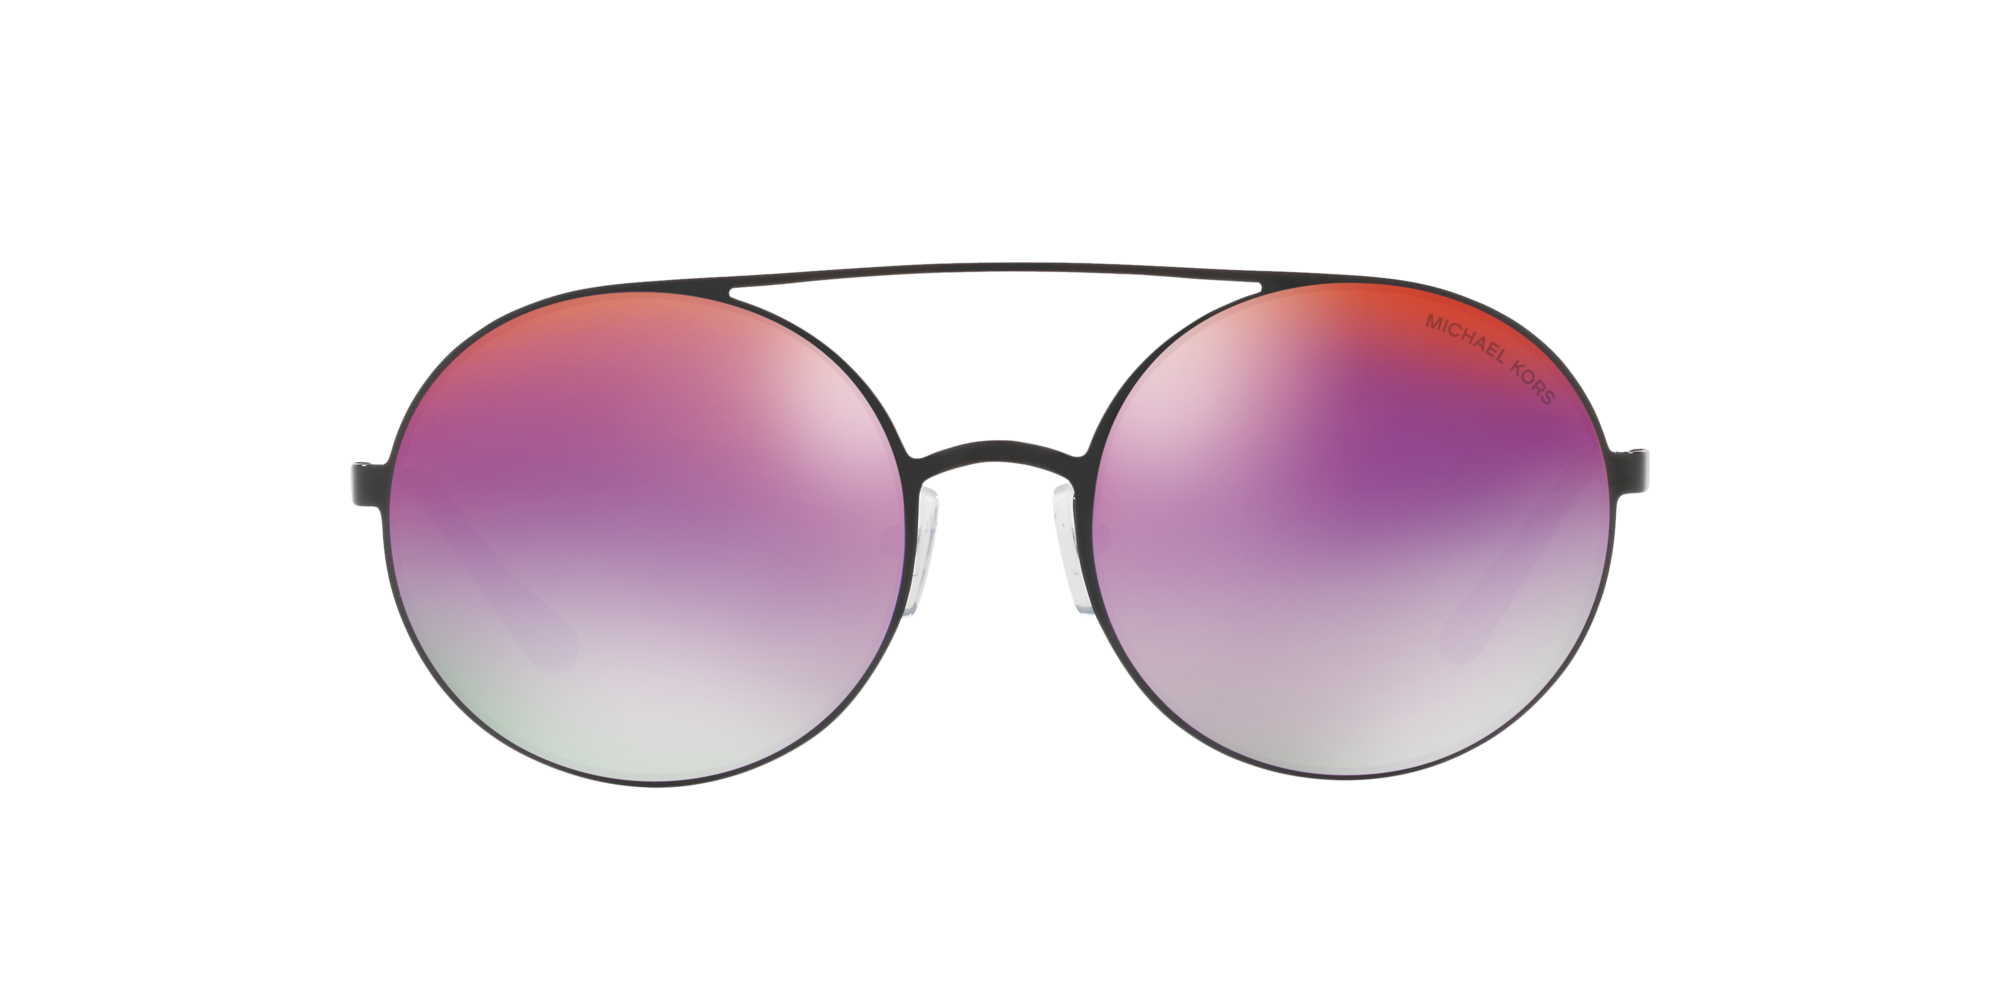 Michael Kors MK5004 CHELSEA Sunglasses  10034V Rose Gold  Purple Mirror  Lens 5913135  EZContactscom